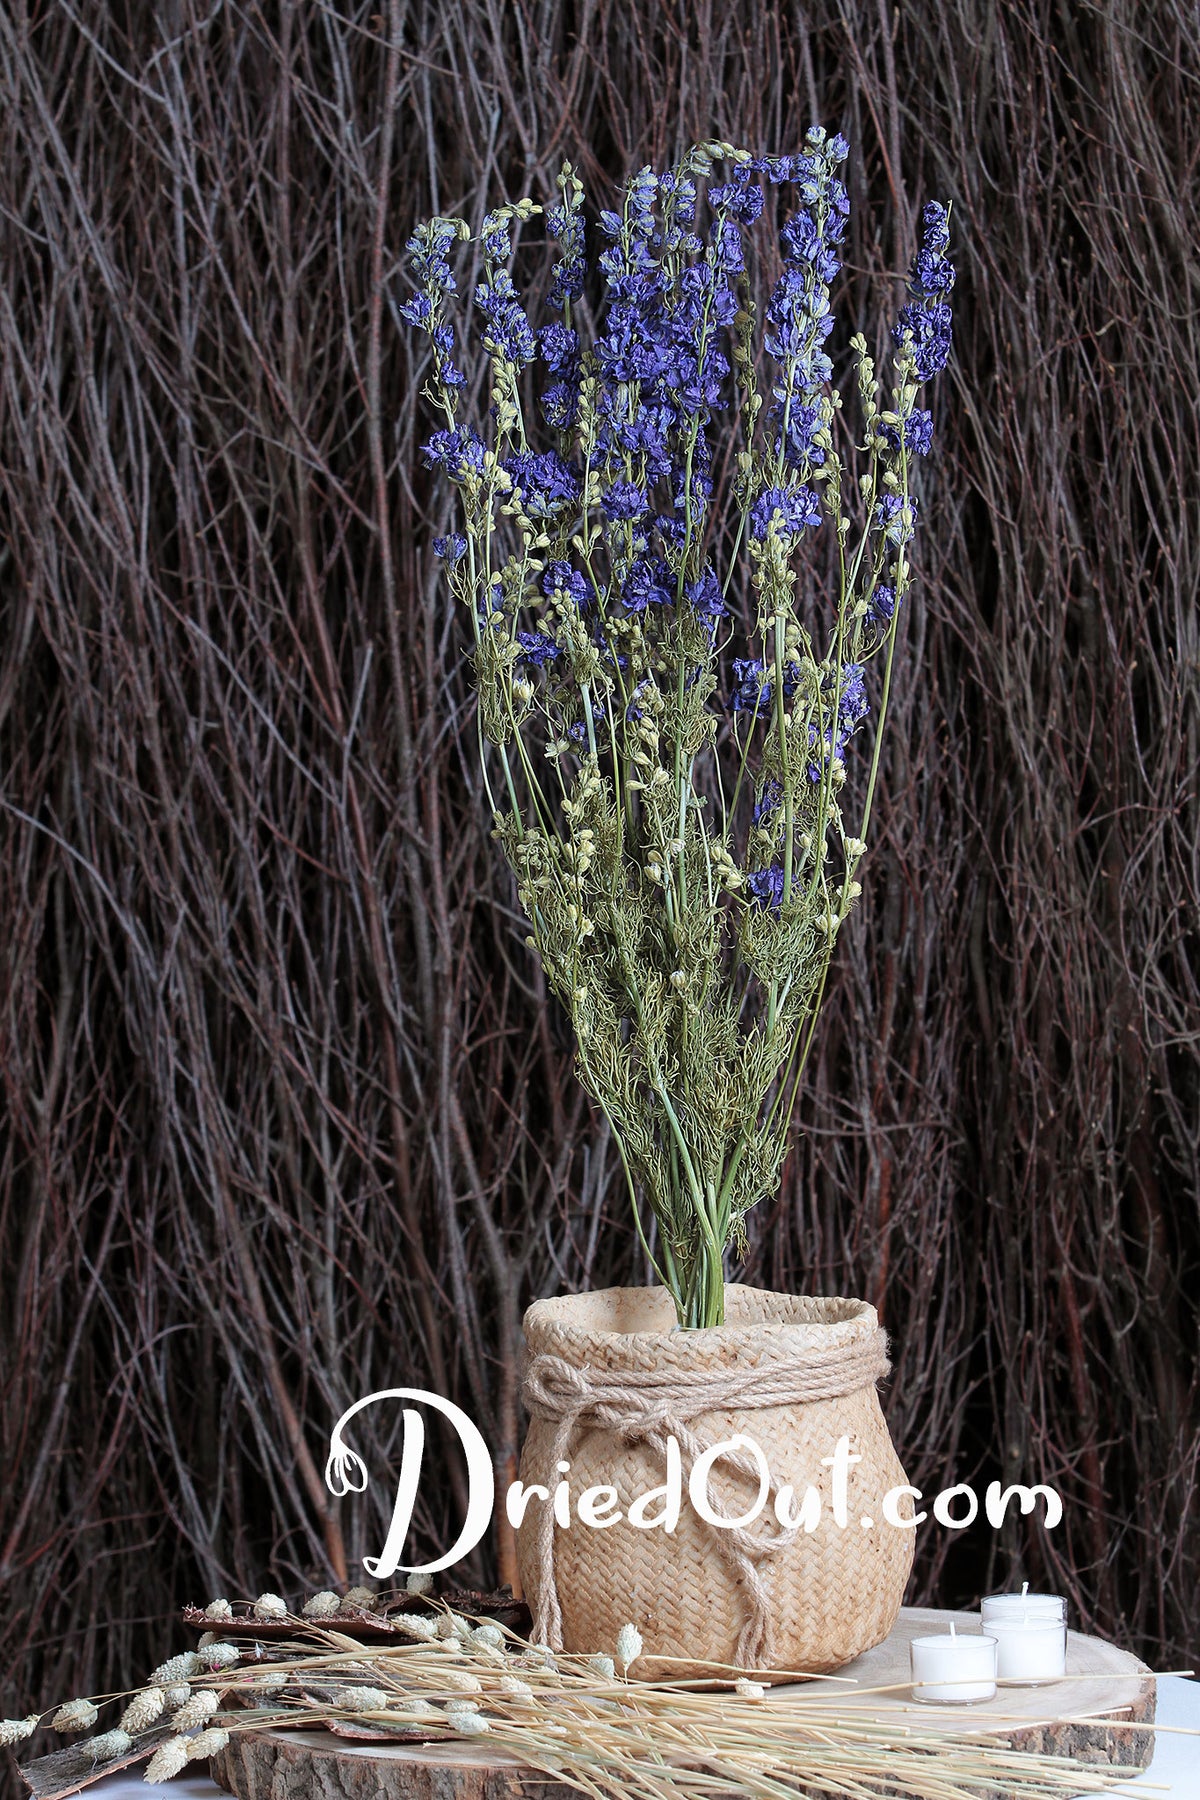 Dried Natural Blue &quot;Delphinium&quot; Flowers by the bunch